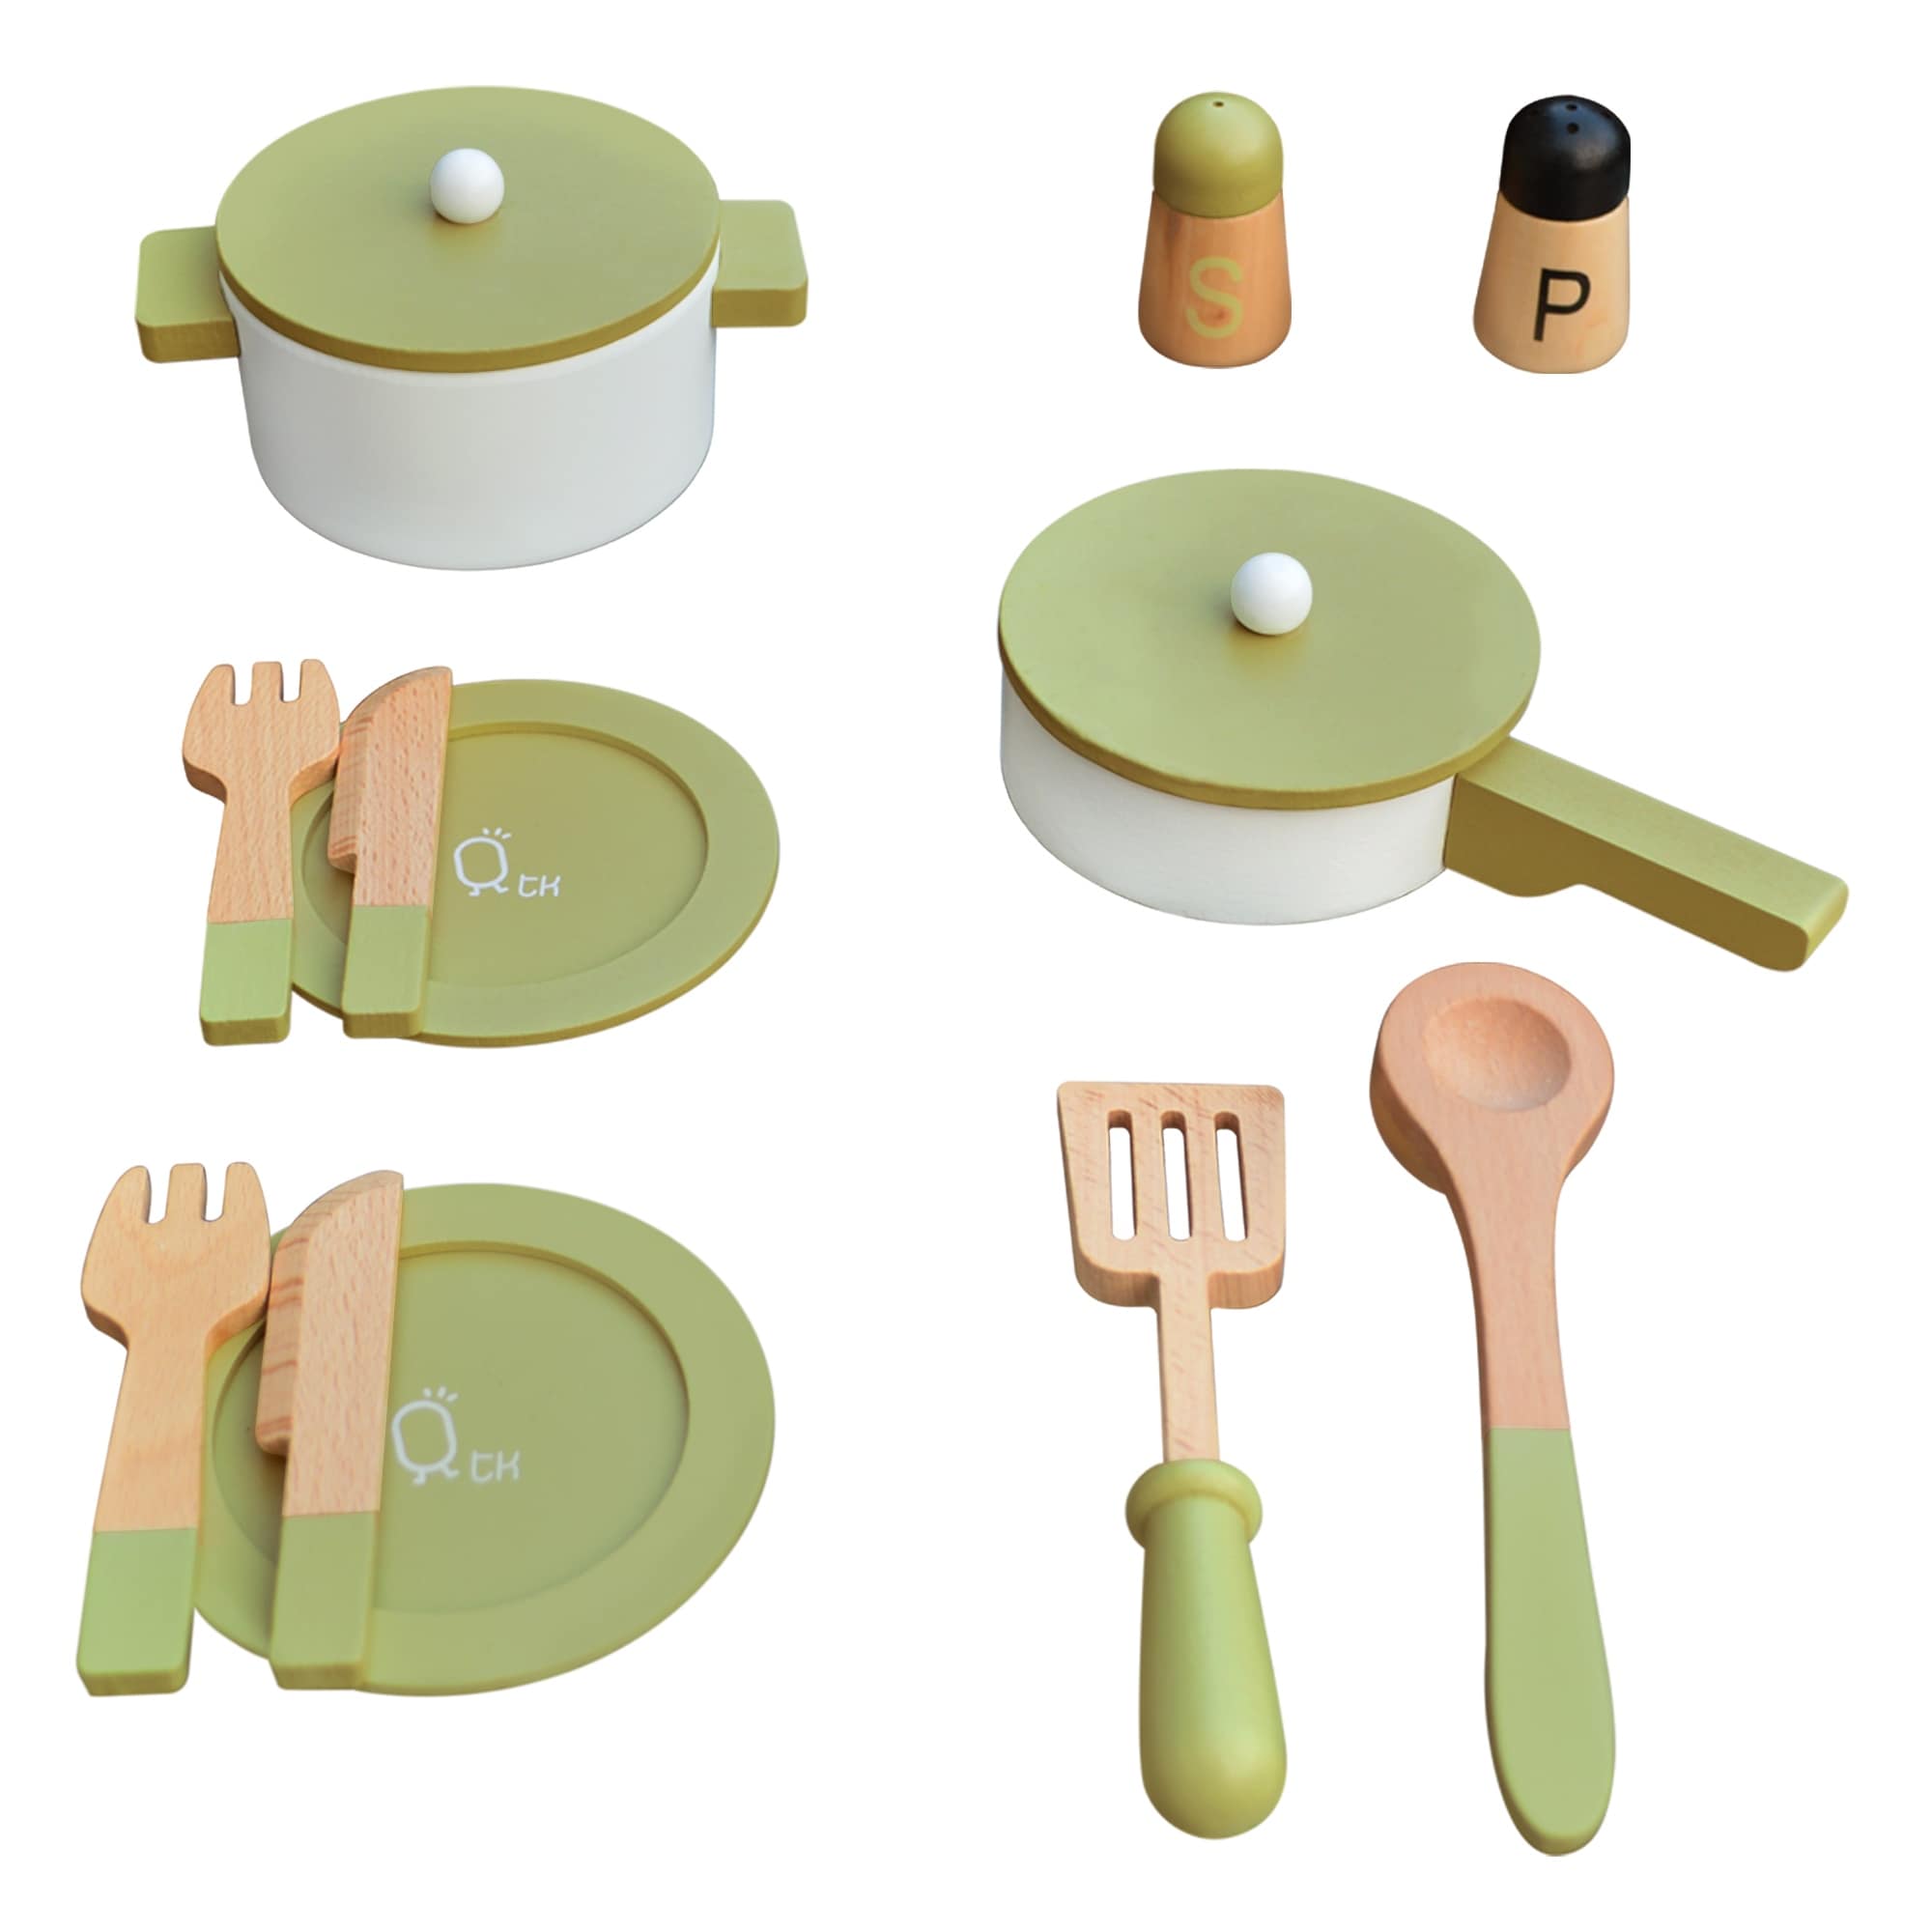 Melissa & Doug 22-Piece Play Kitchen Accessories Set - Utensils, Pot, Pans,  and More 